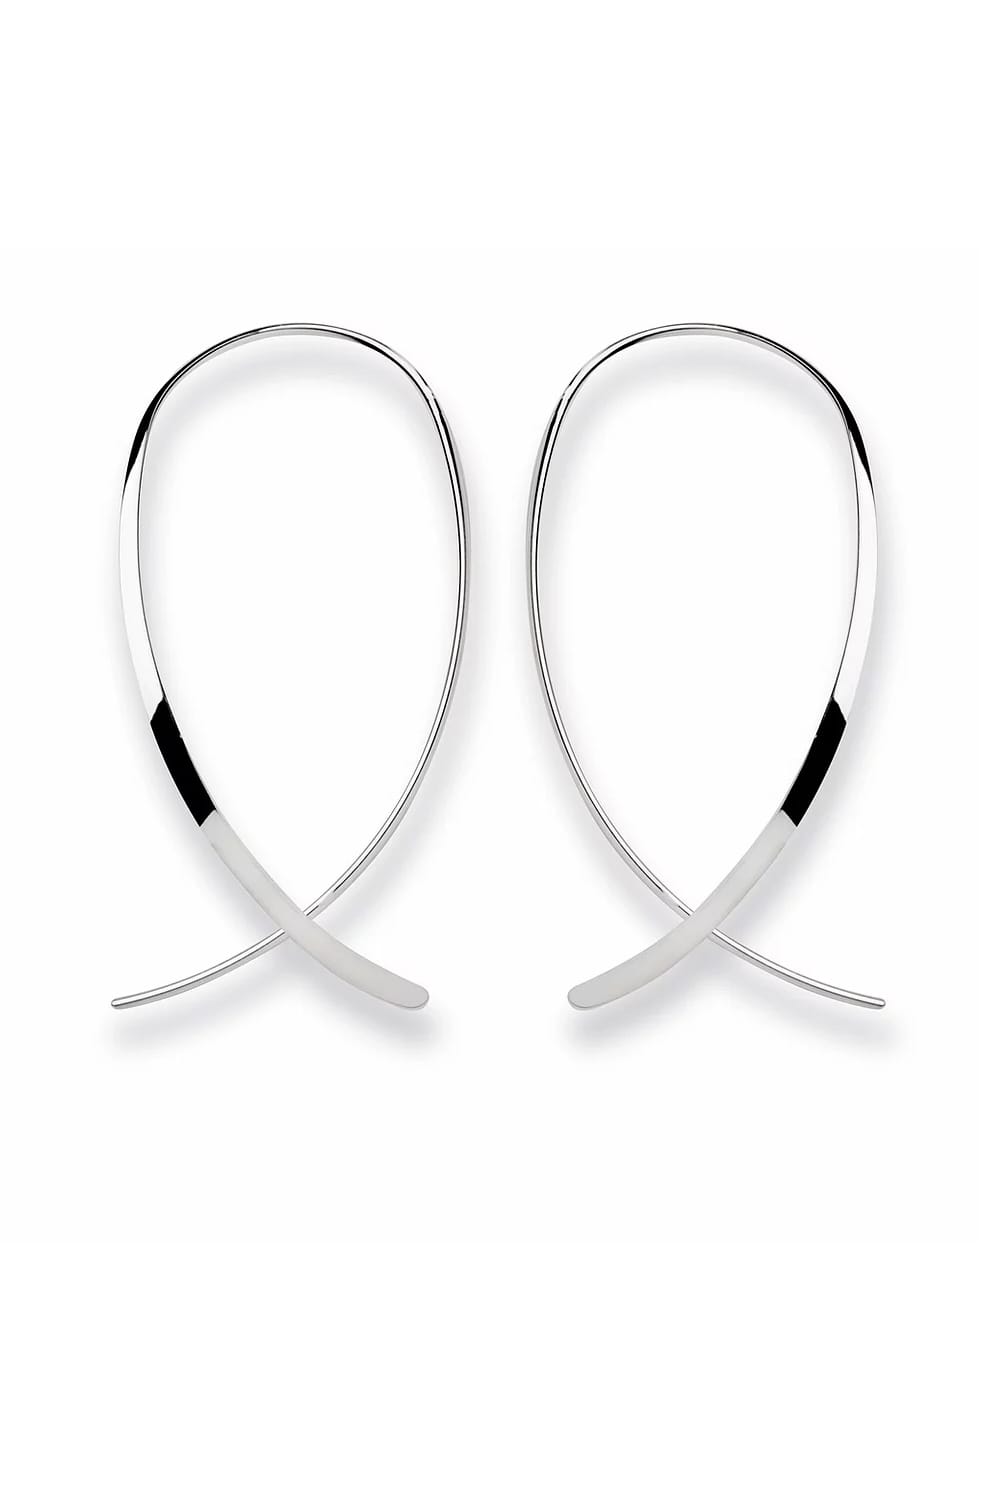 Silver Swirl Earrings available at LeGassick Diamonds and Jewellery Gold Coast, Australia.